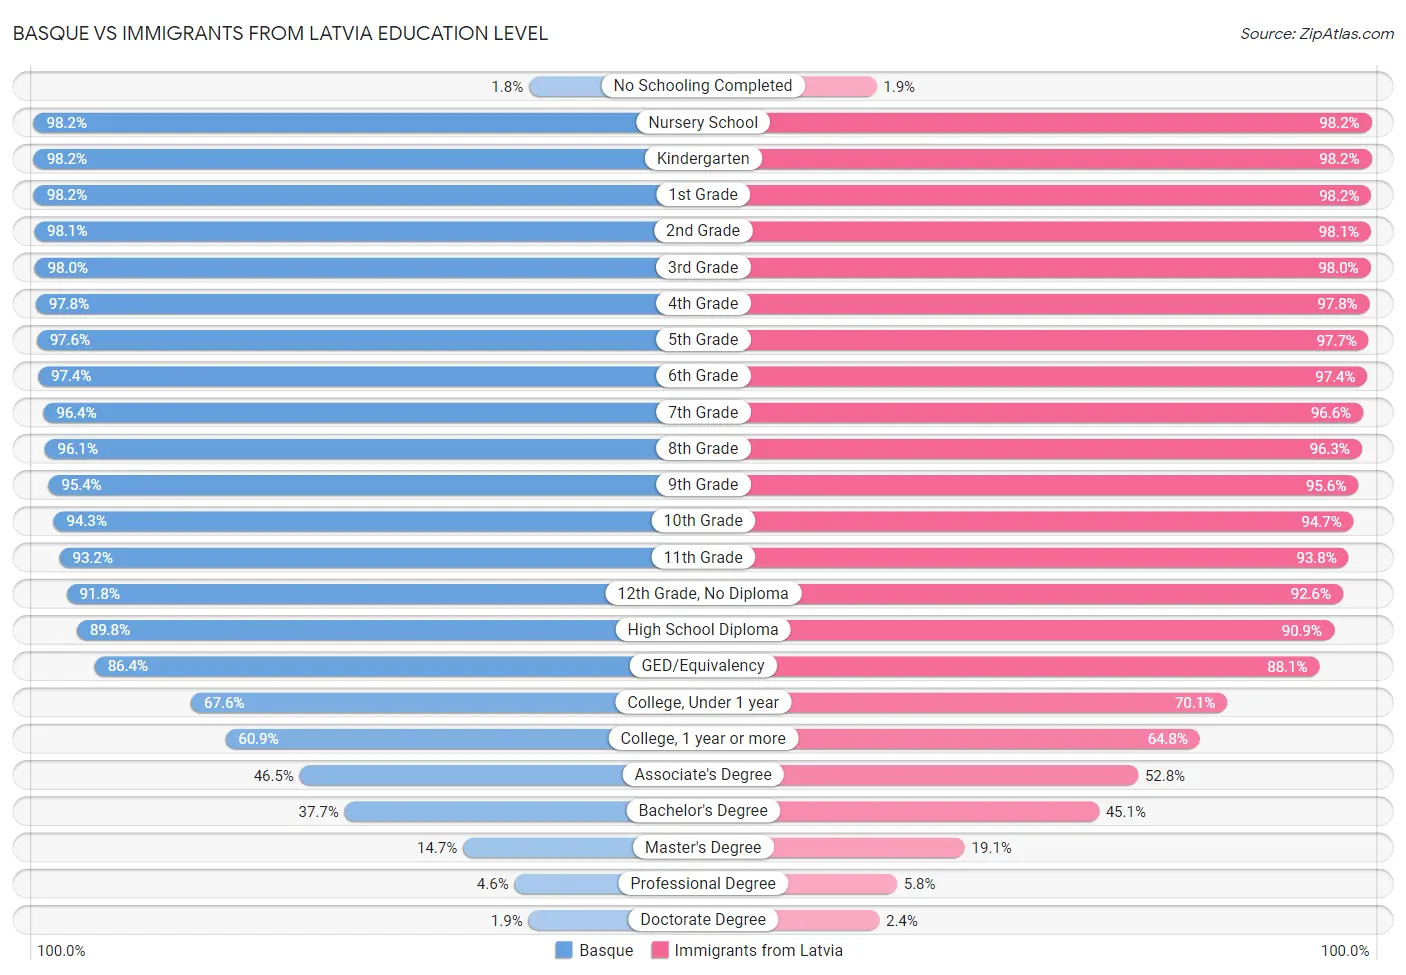 Basque vs Immigrants from Latvia Education Level